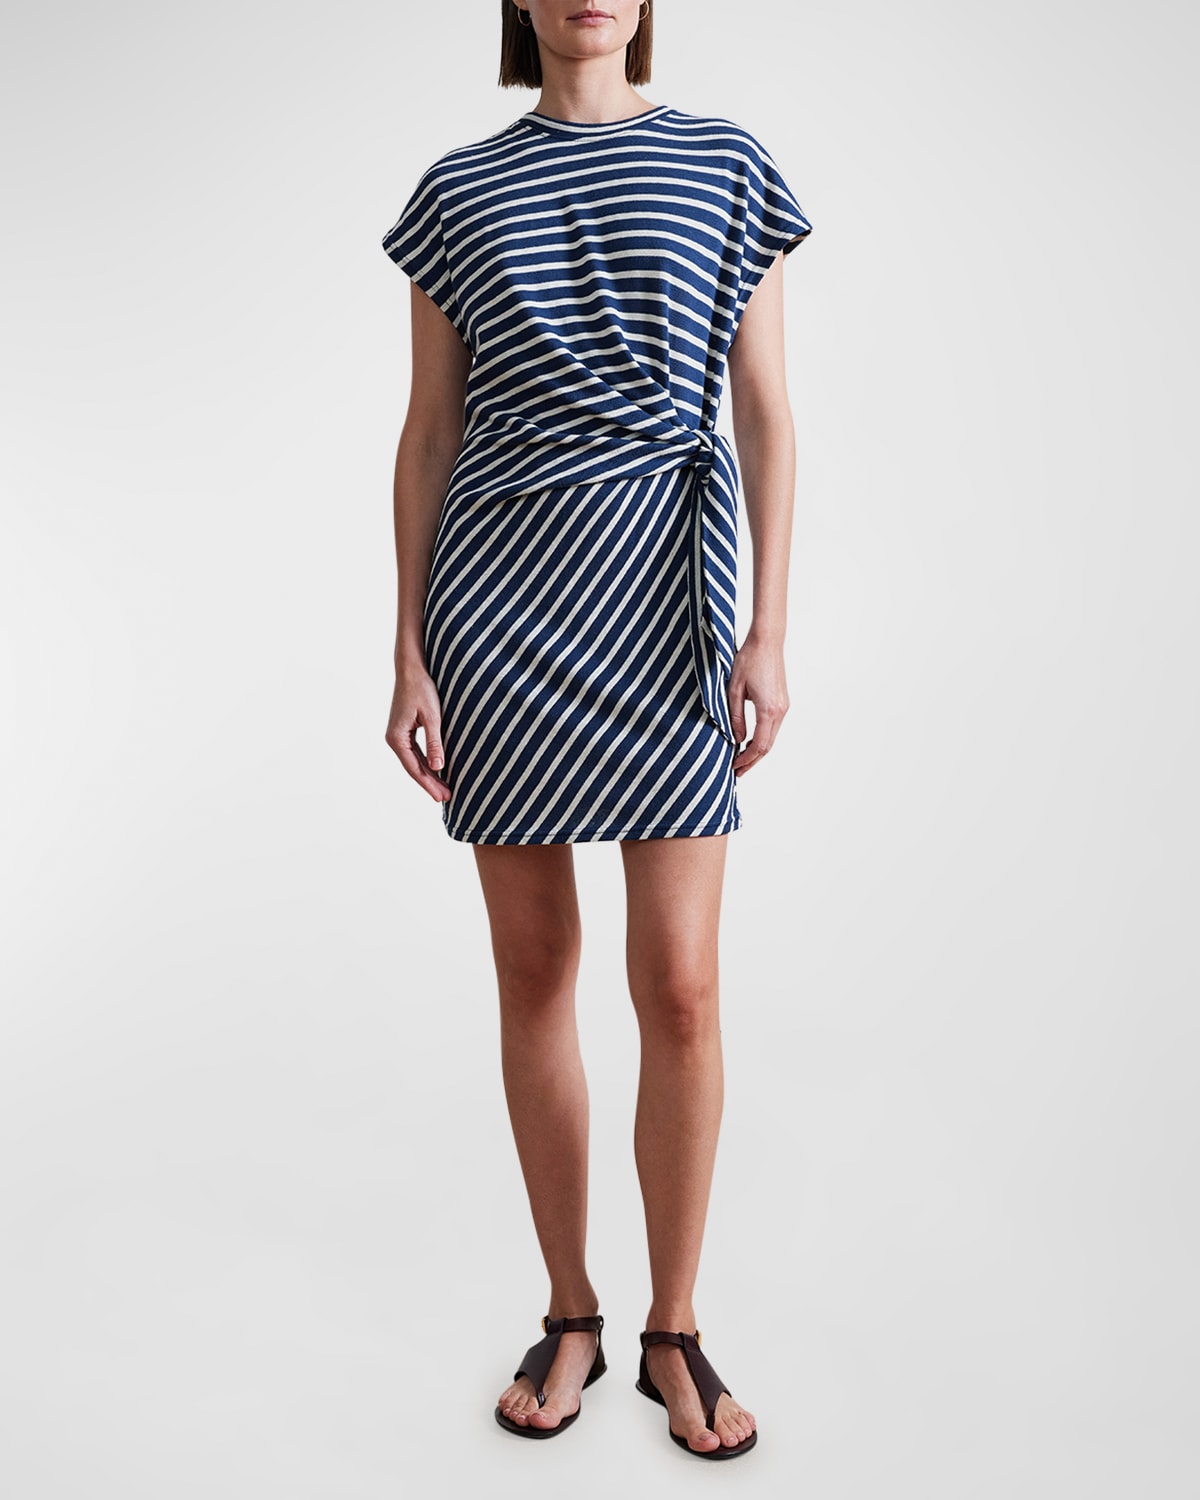 Apiece Apart Nina Striped Mini Dress With Tie Detail In Navy Cream Stripe